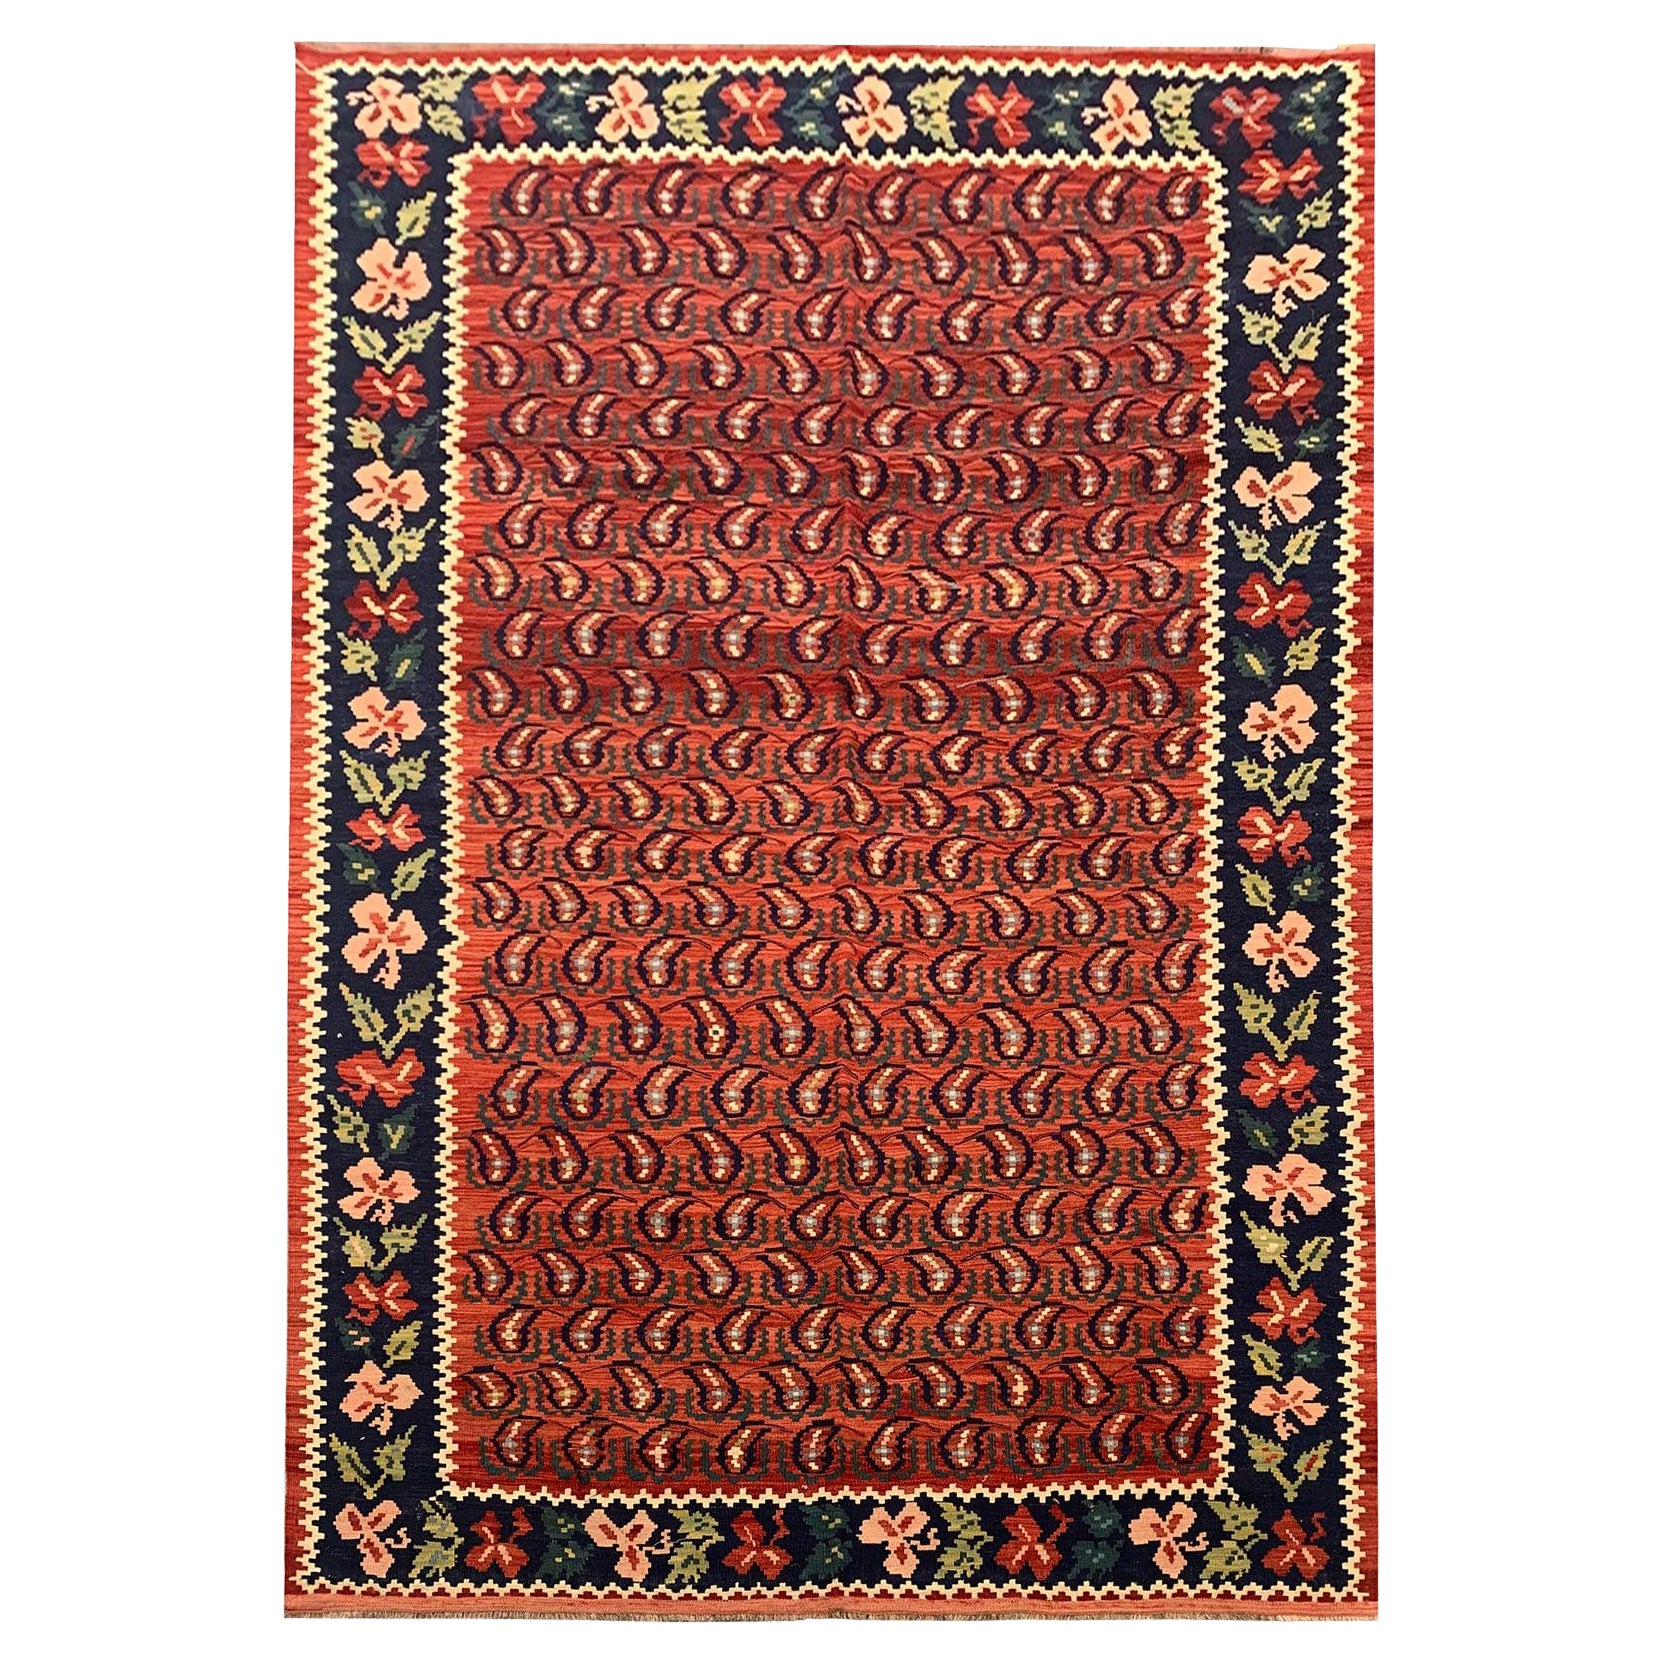 Antique Caucasian Kilim Rug, Red All Over Paisley Pattern Kelim (tapis caucasien ancien)